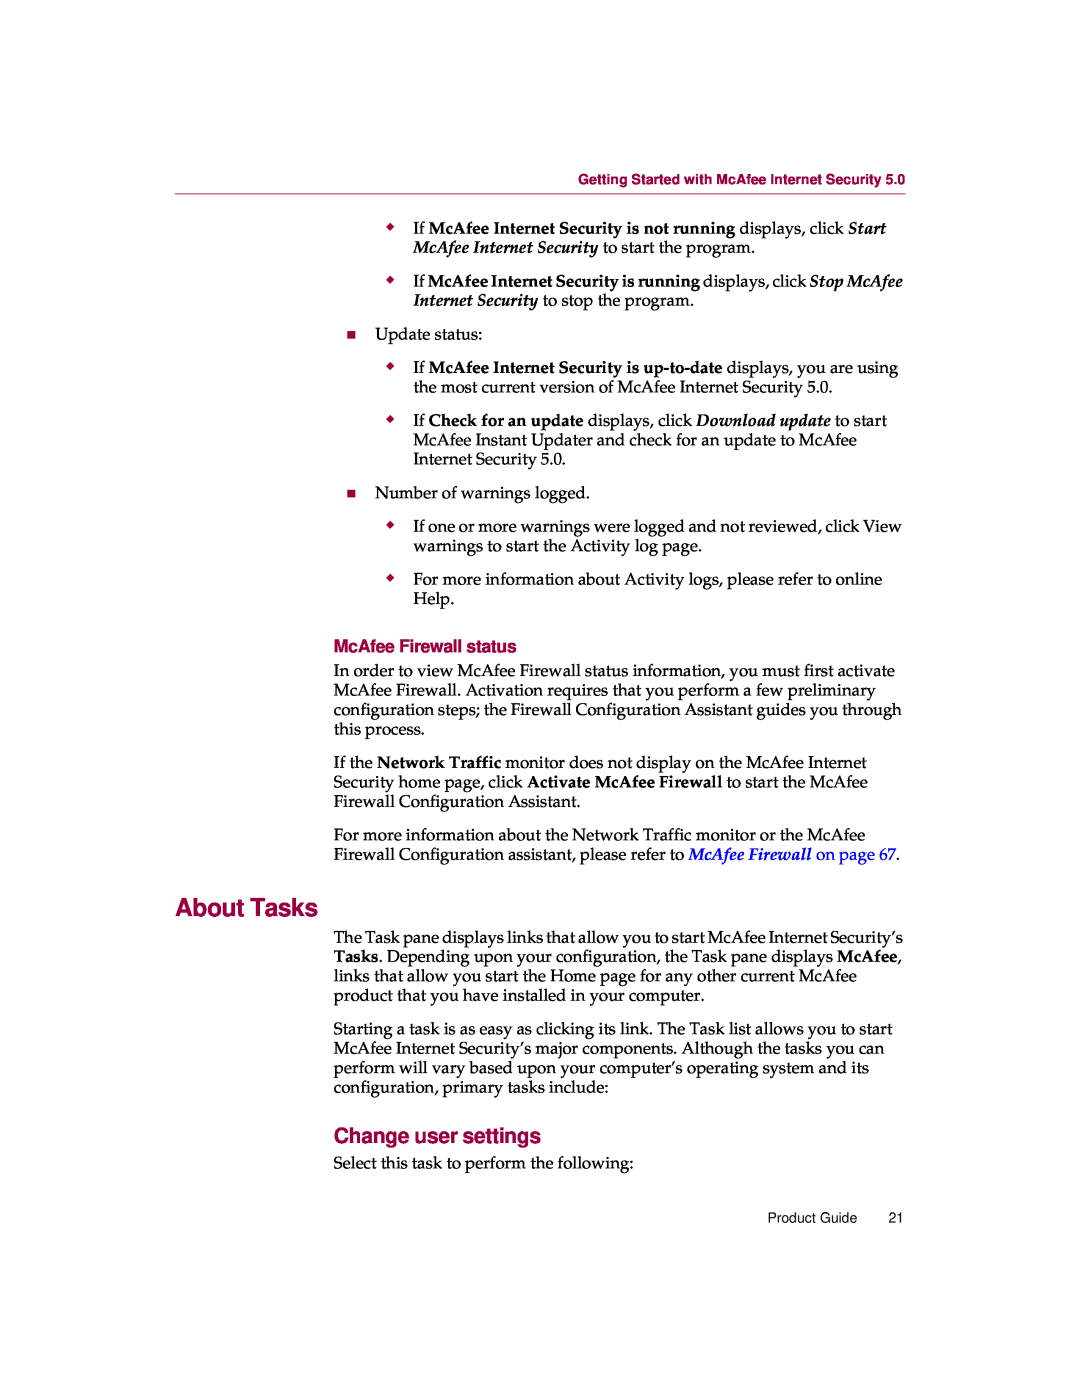 McAfee 5 manual About Tasks, Change user settings, McAfee Firewall status 